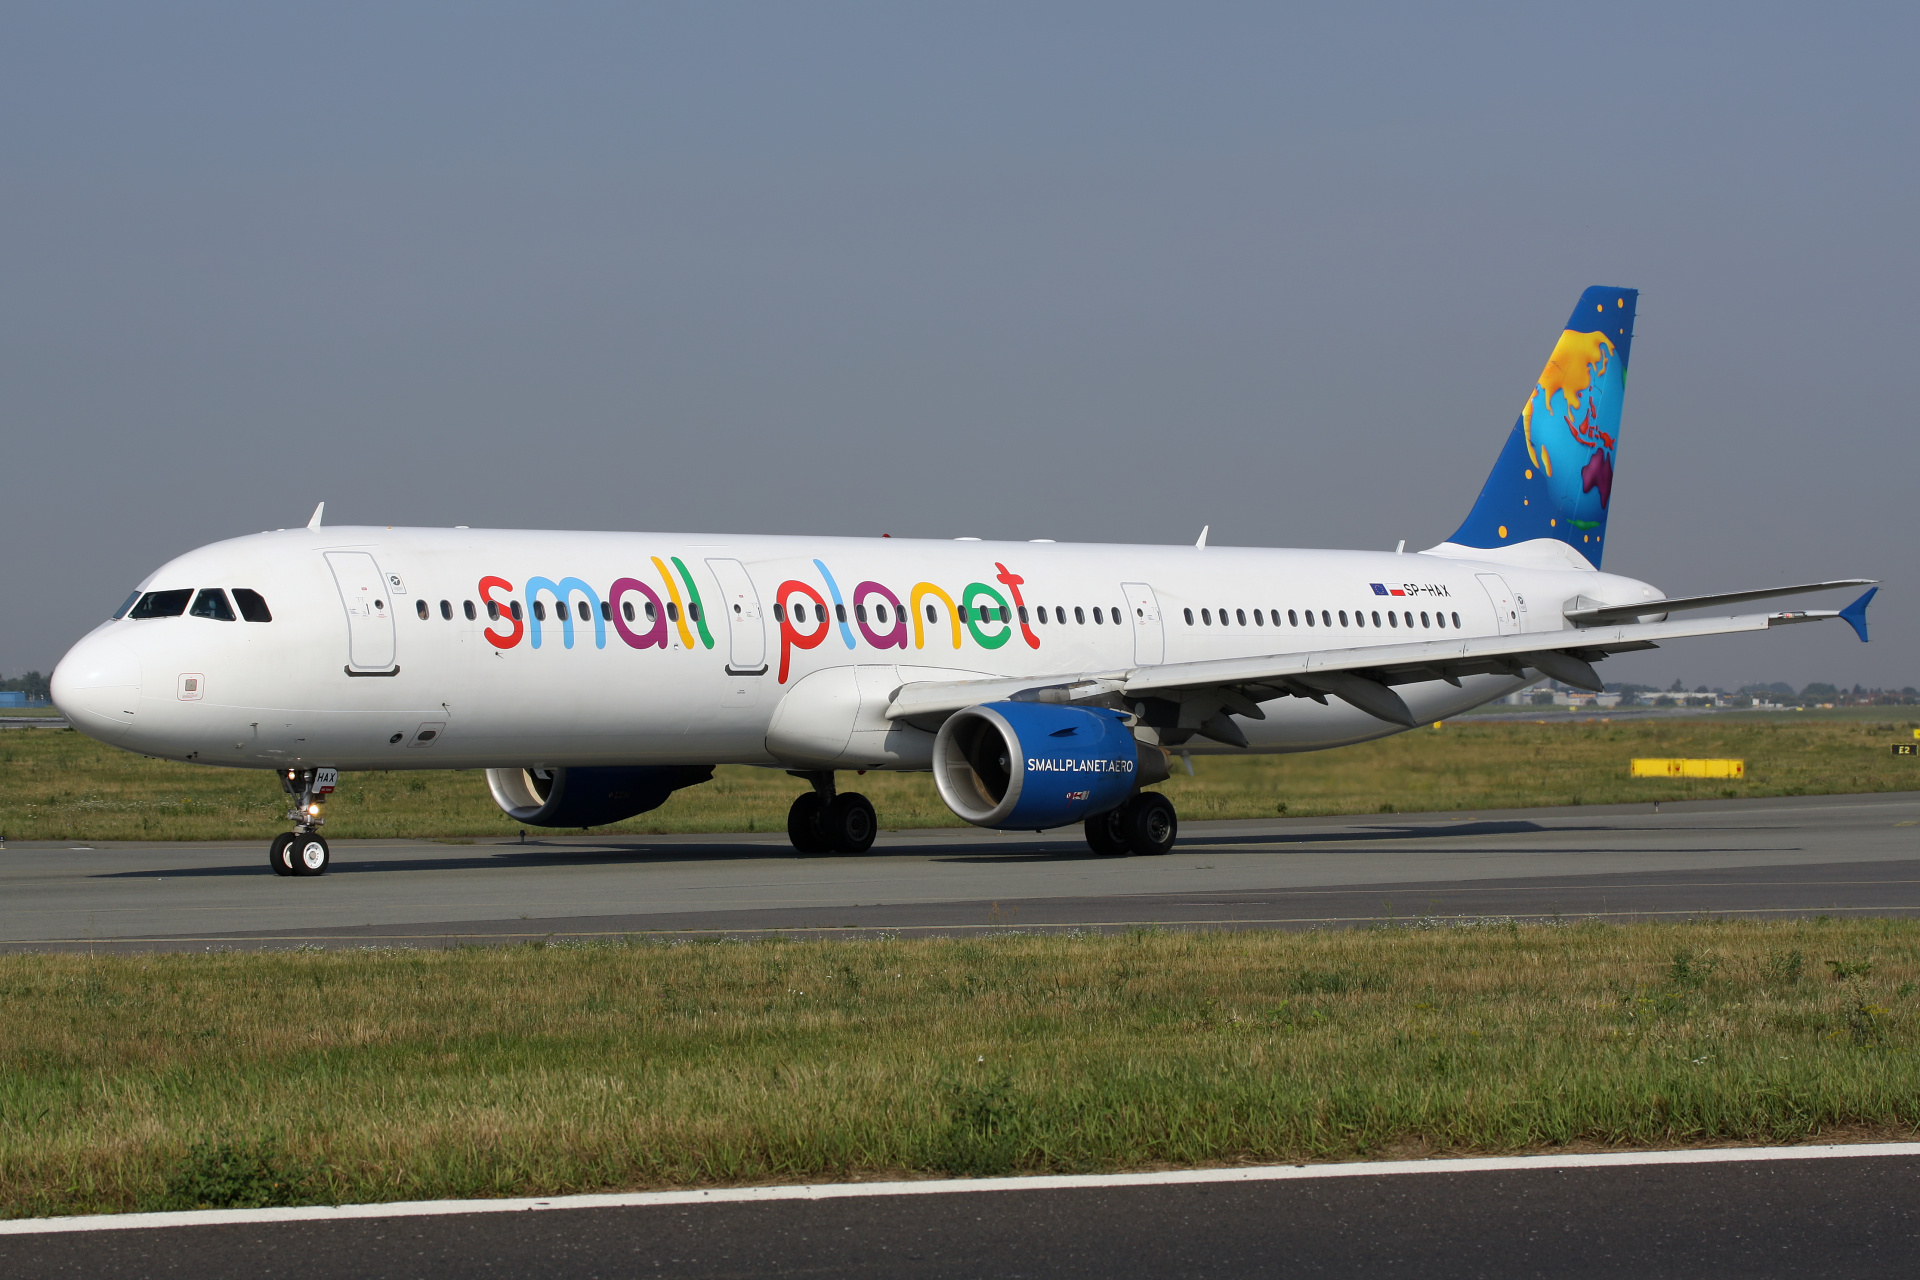 SP-HAX (Samoloty » Spotting na EPWA » Airbus A321-200 » Small Planet Airlines Polska)